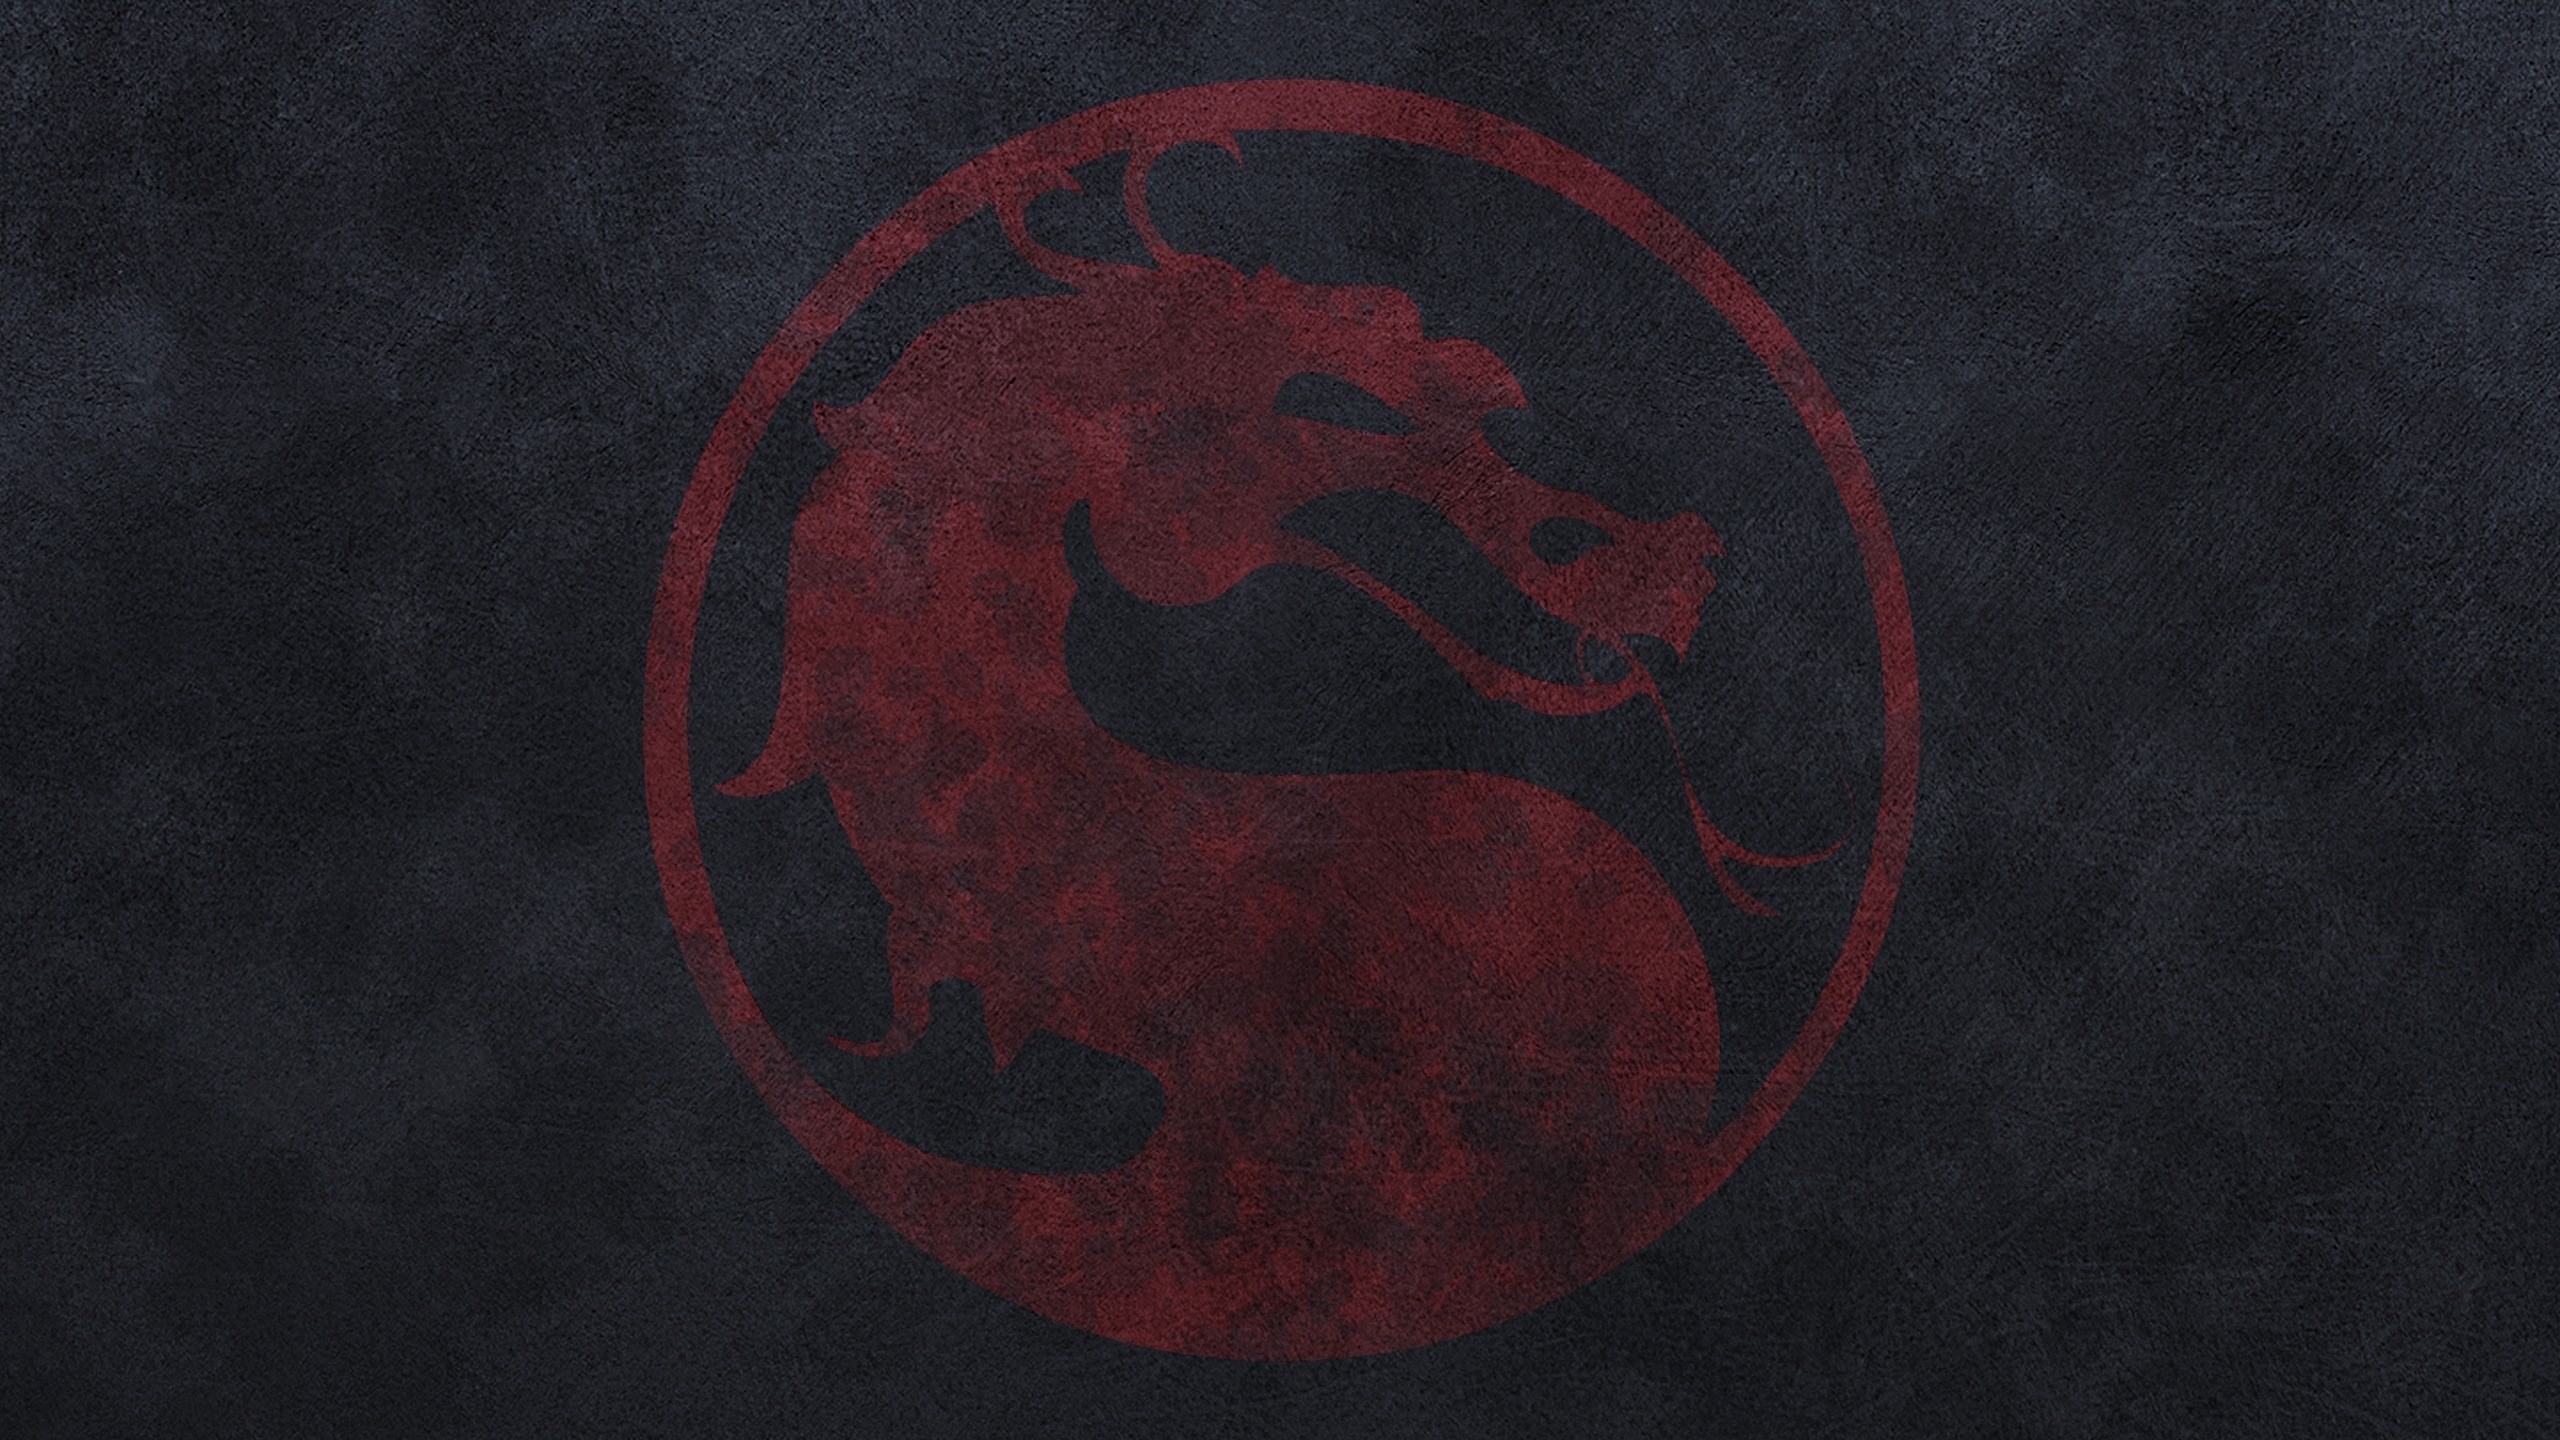 General 2560x1440 Mortal Kombat video games logo